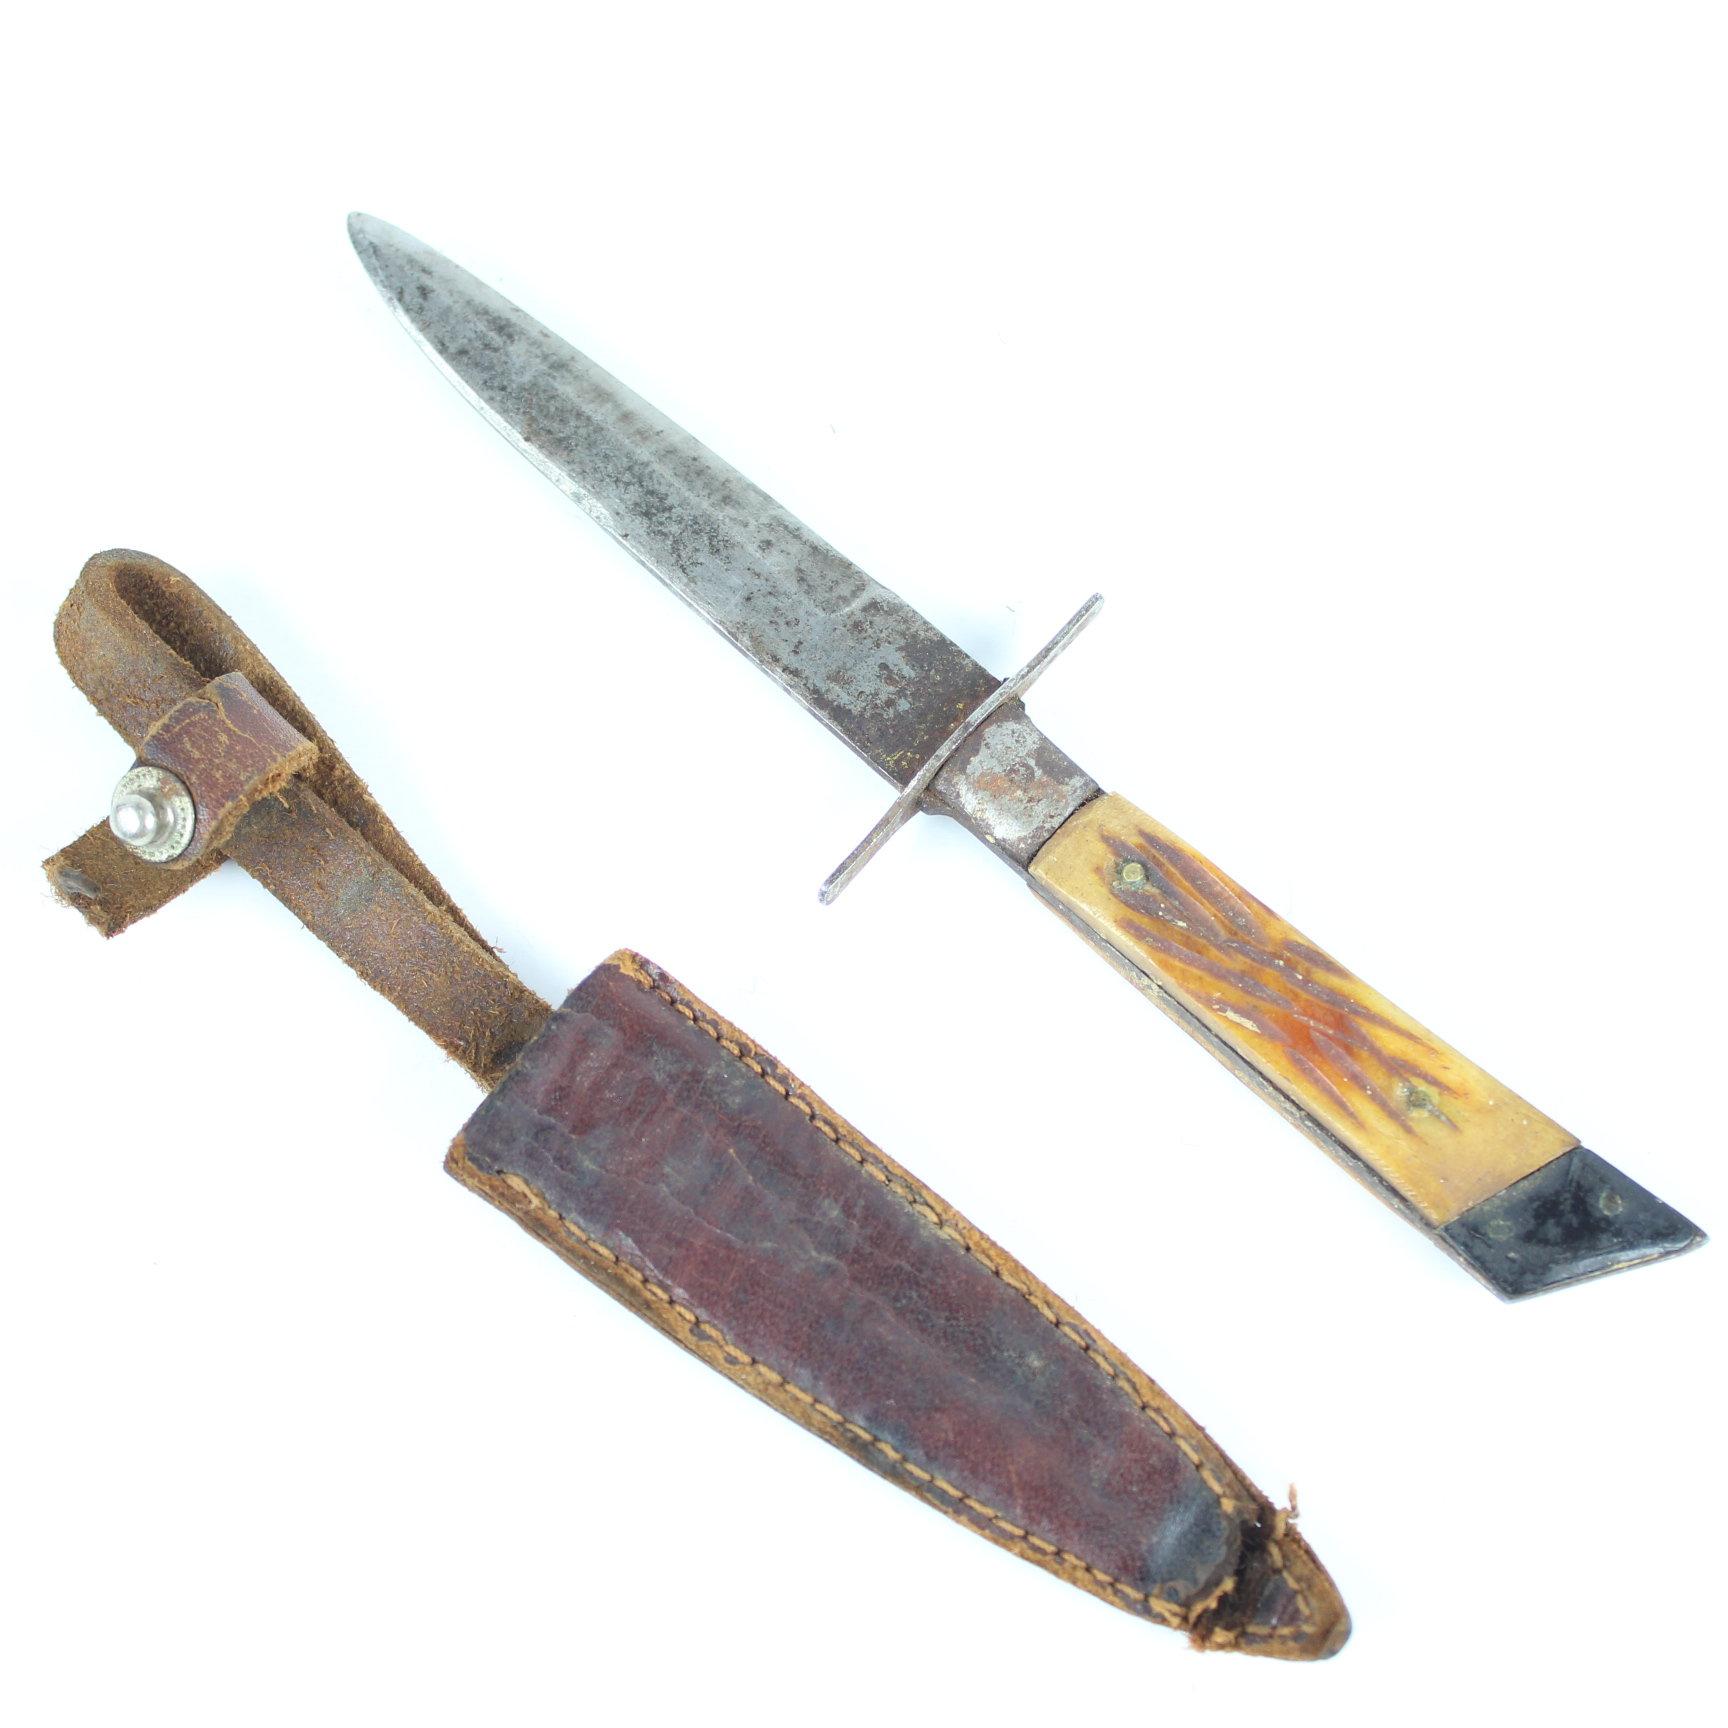 Japan World Merchandise Exchange 6.25" Fixed Blade Hunting Knife